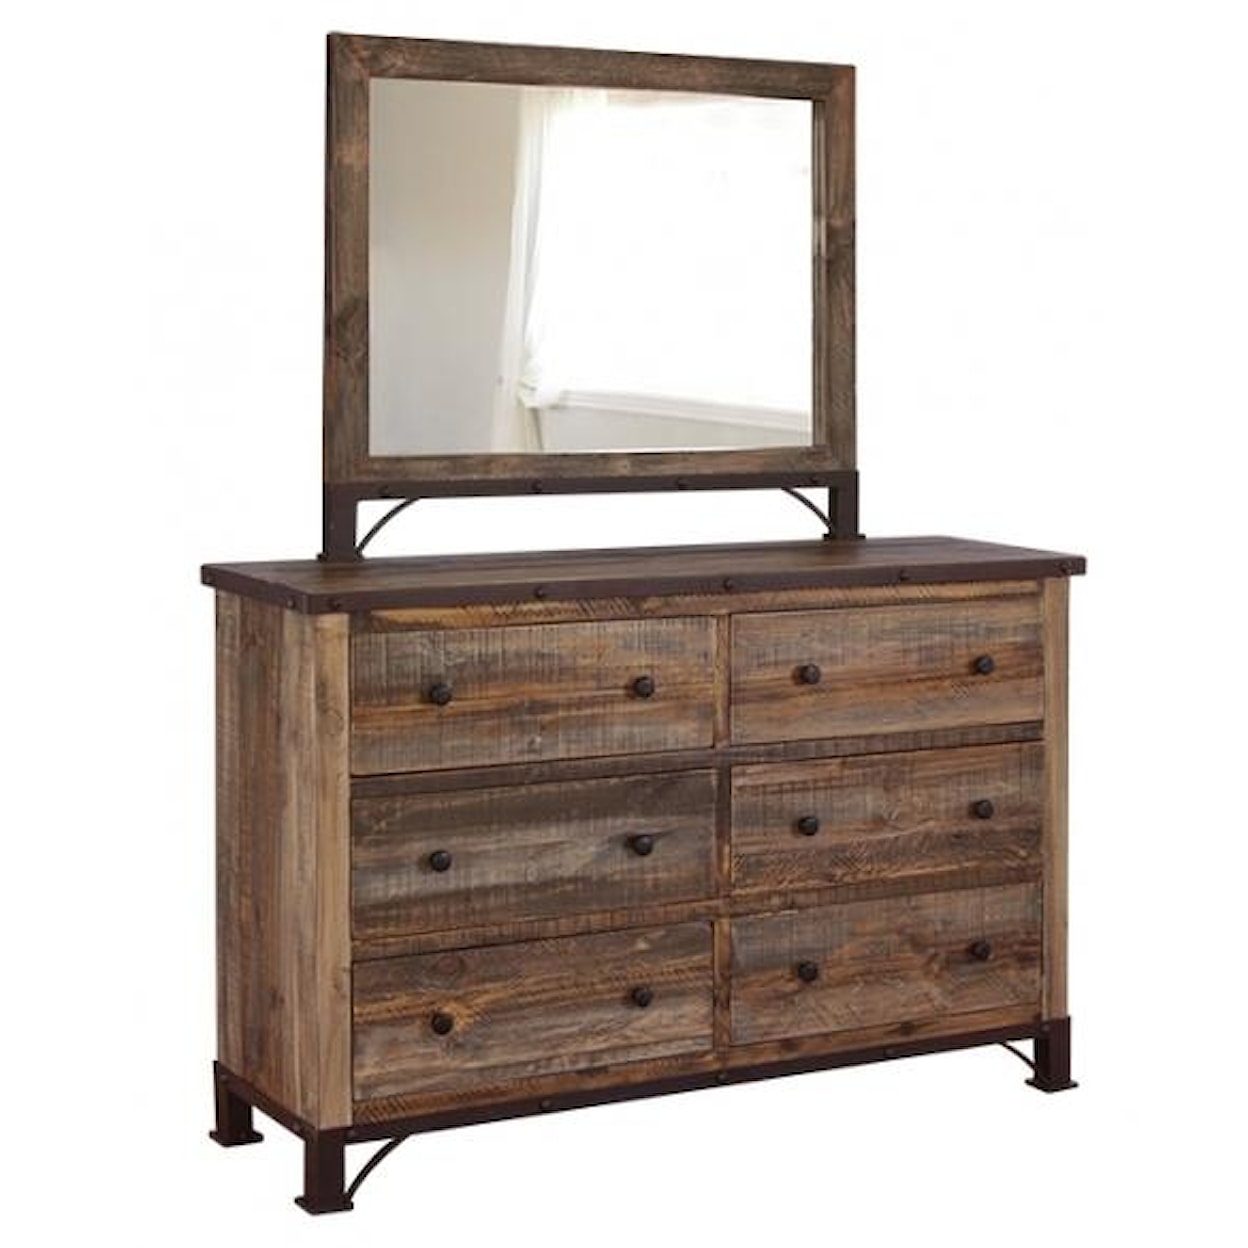 IFD International Furniture Direct 900 Antique Dresser and Mirror